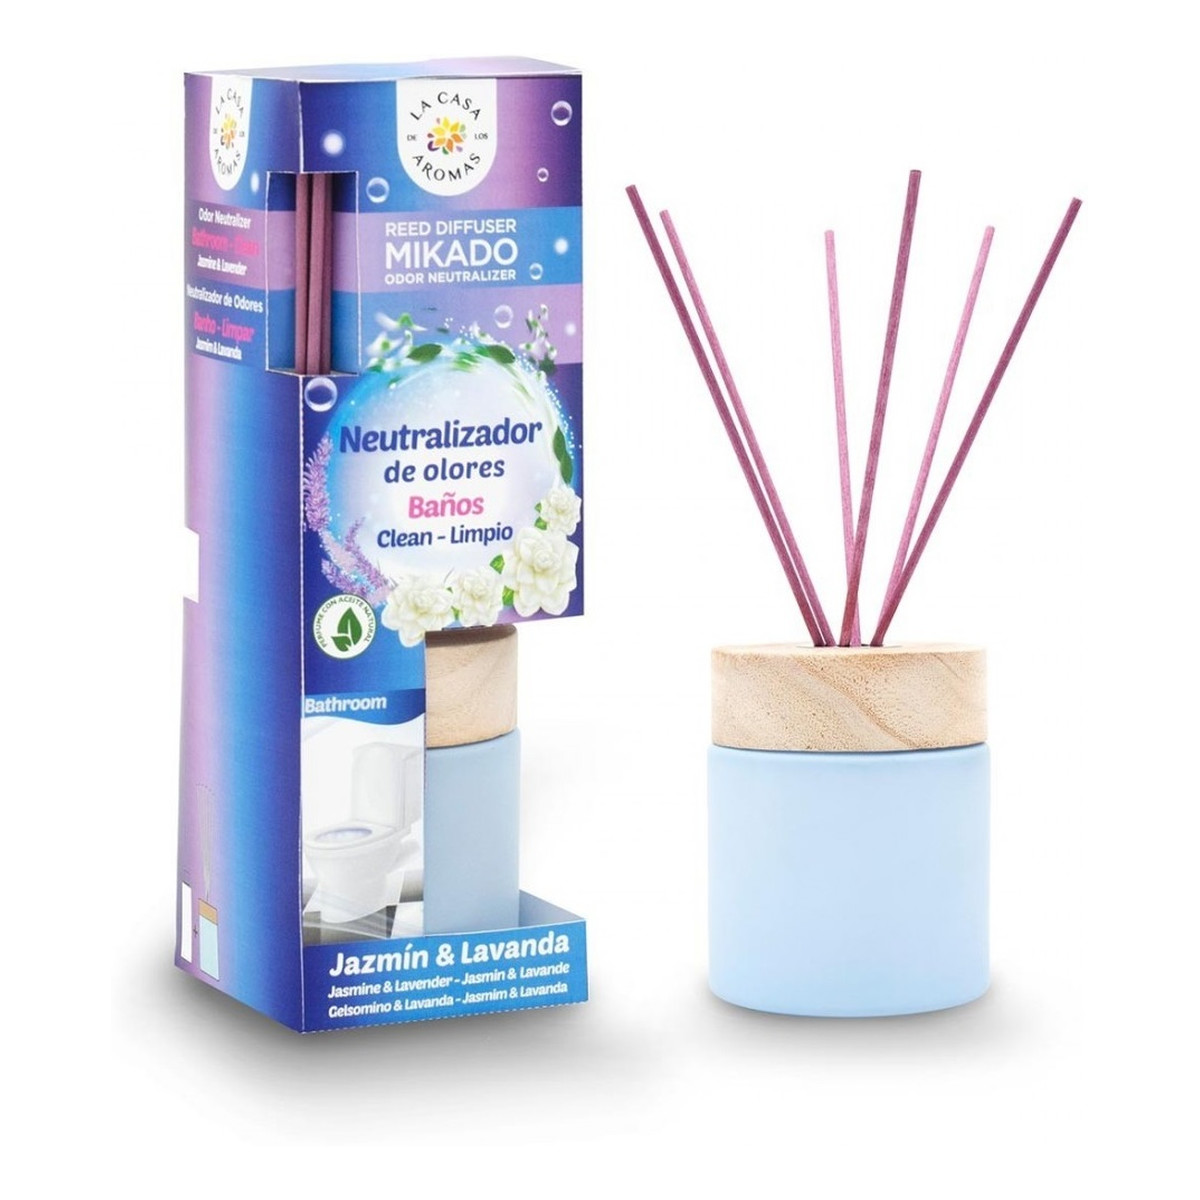 La Casa De Los Aromas Mikado special odor neutralizer bath room patyczki zapachowe jaśmin & lawenda 100ml